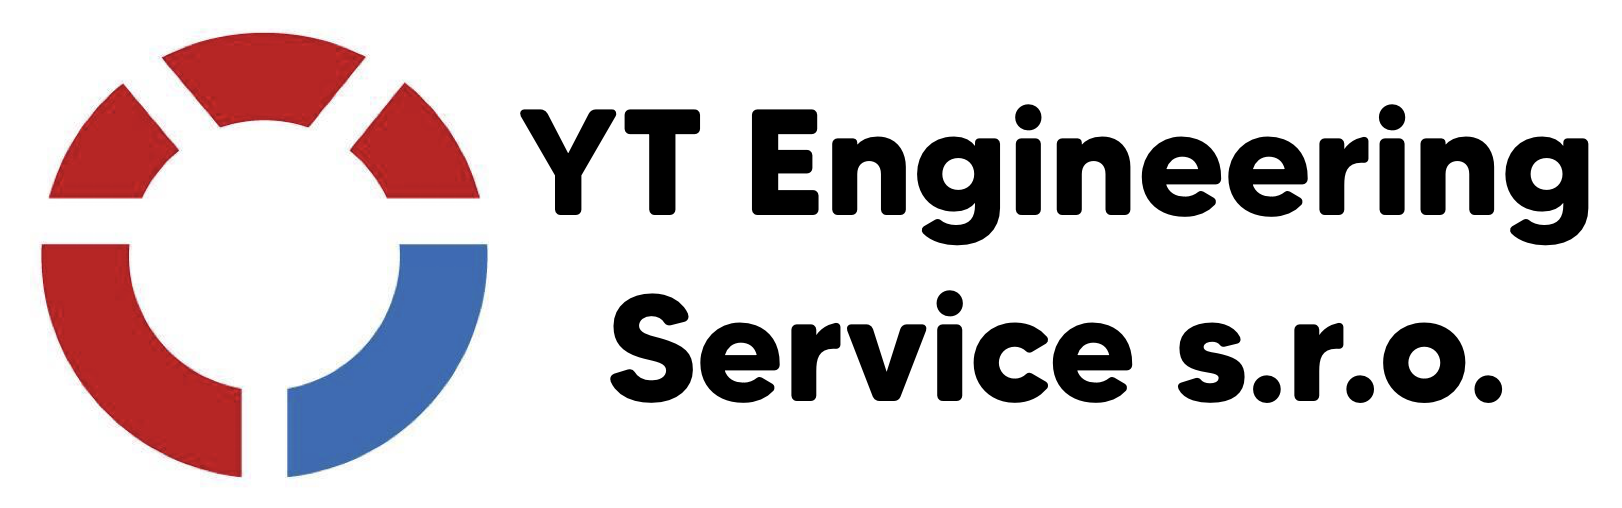 YT Engineering Service logo